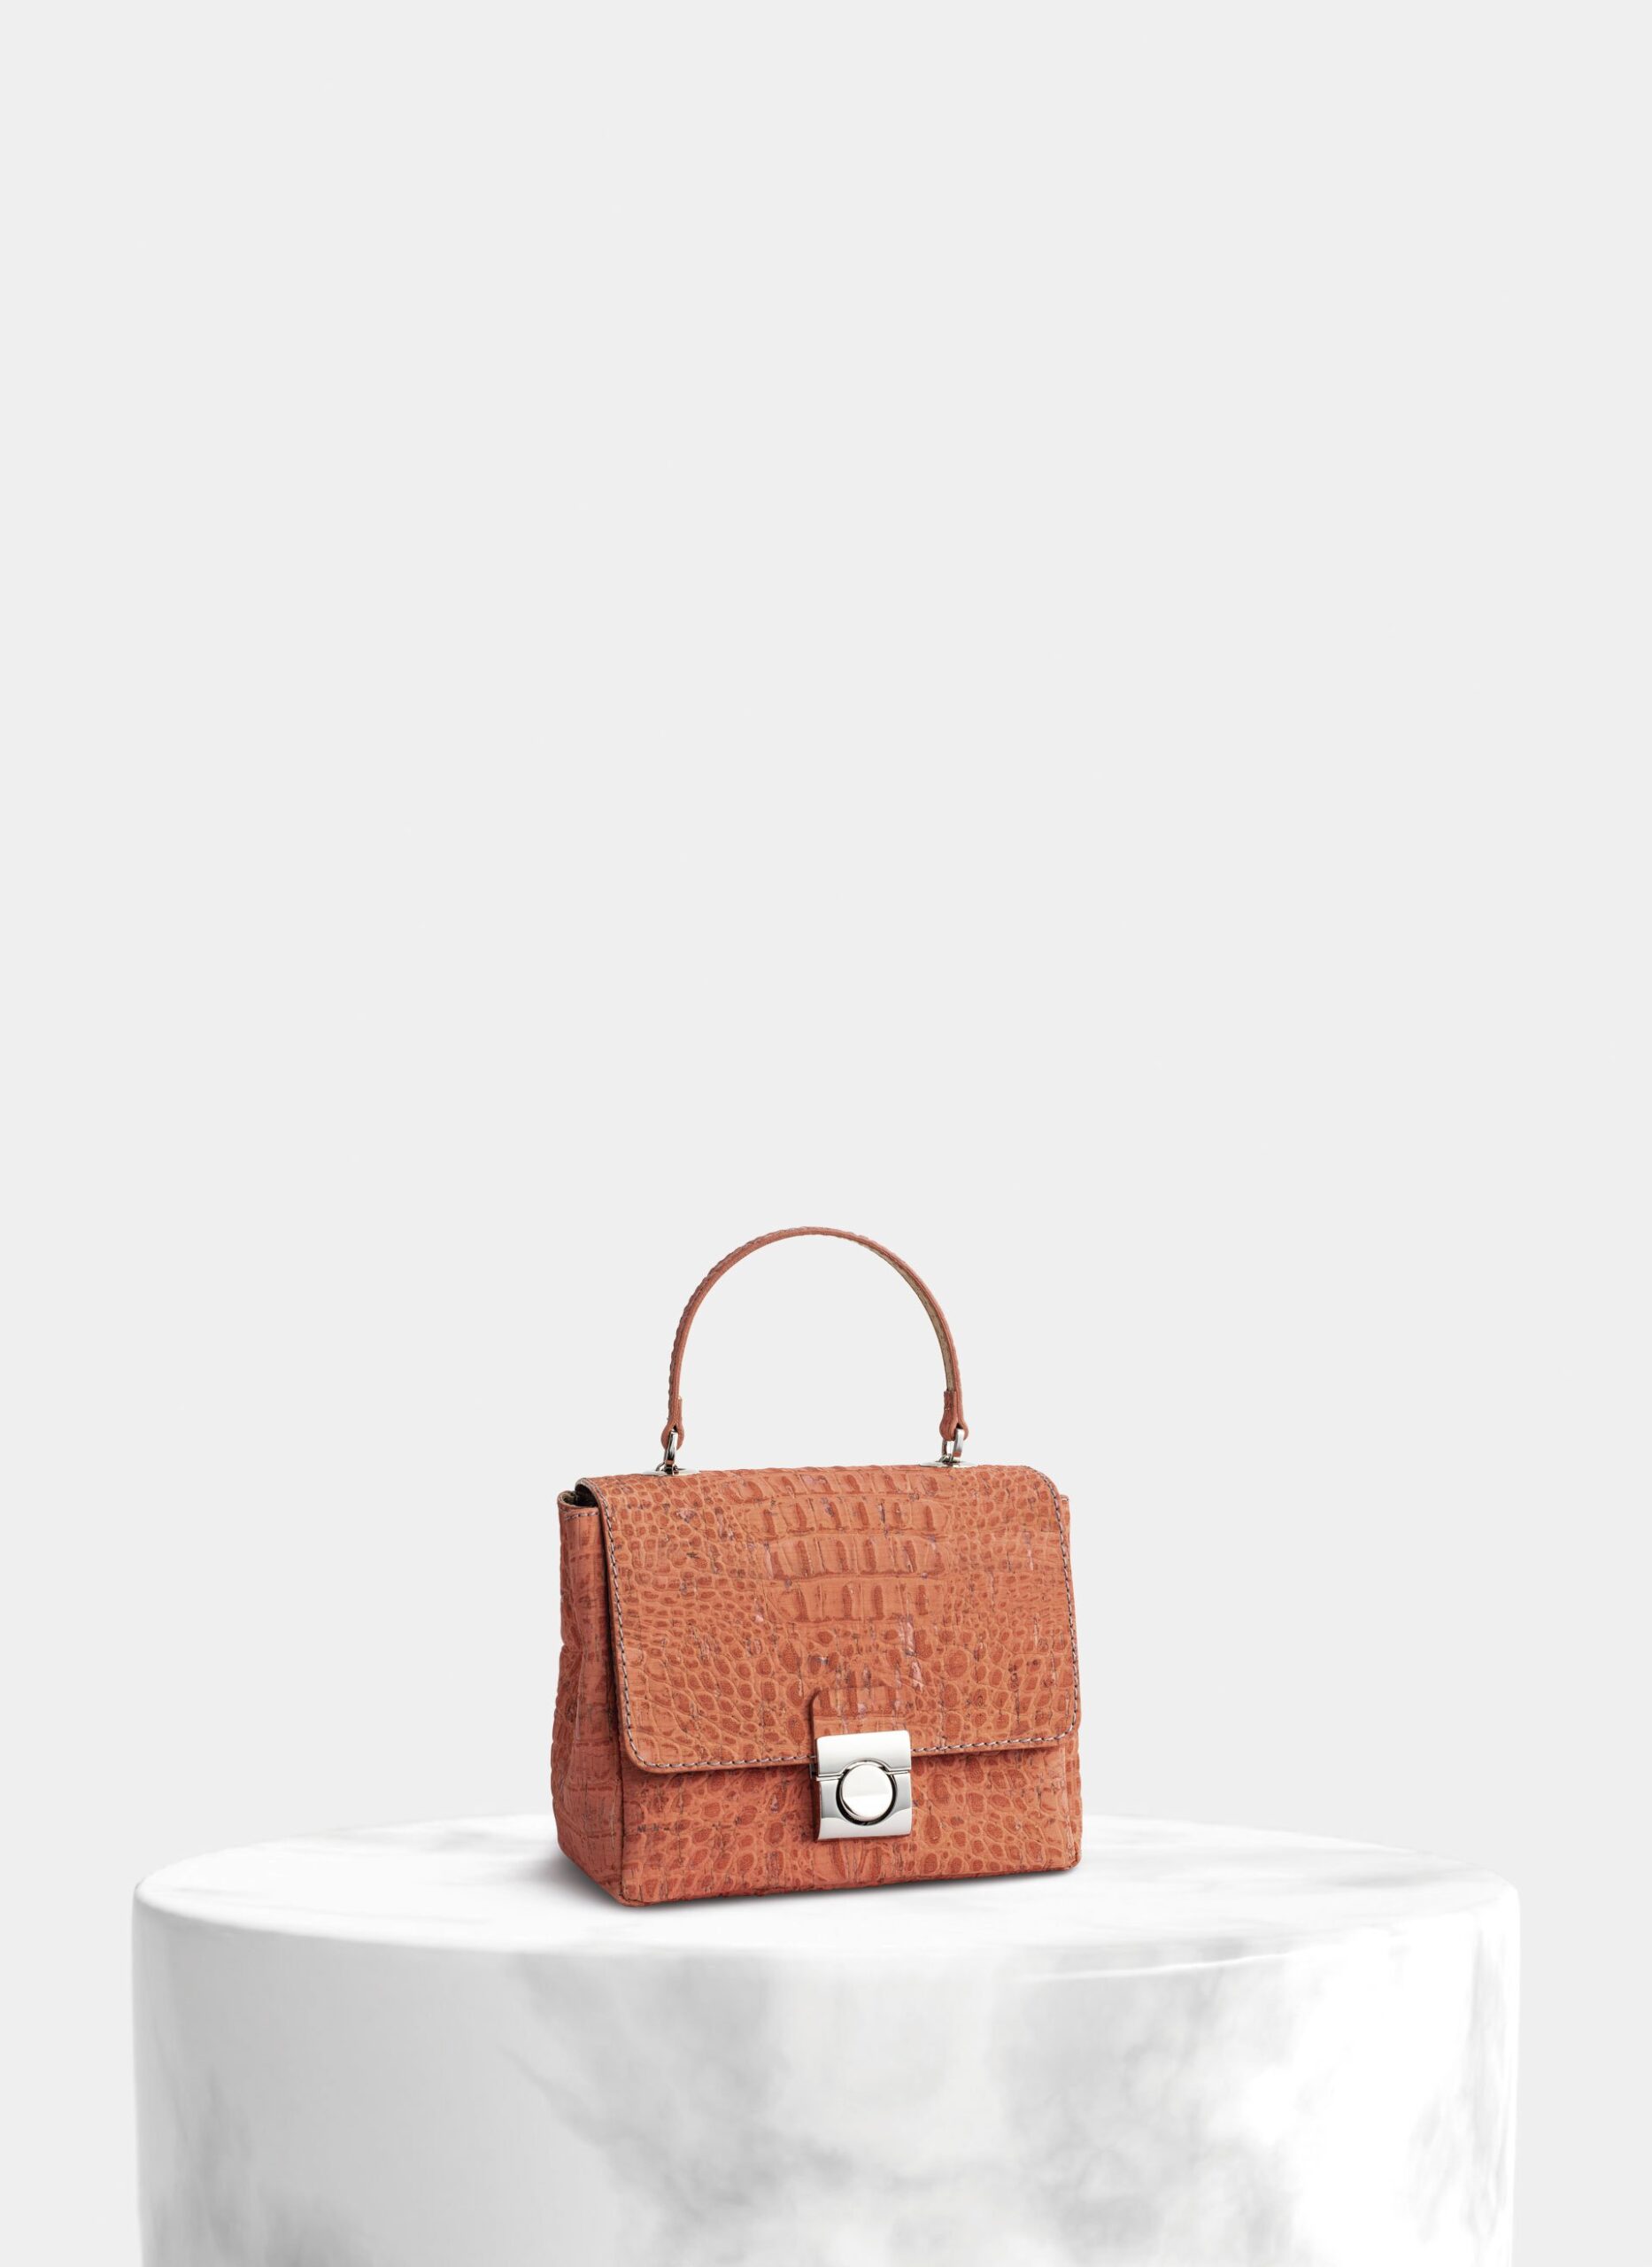 Shop now Mini Cork Shoulder & Handbag Multiple Colors